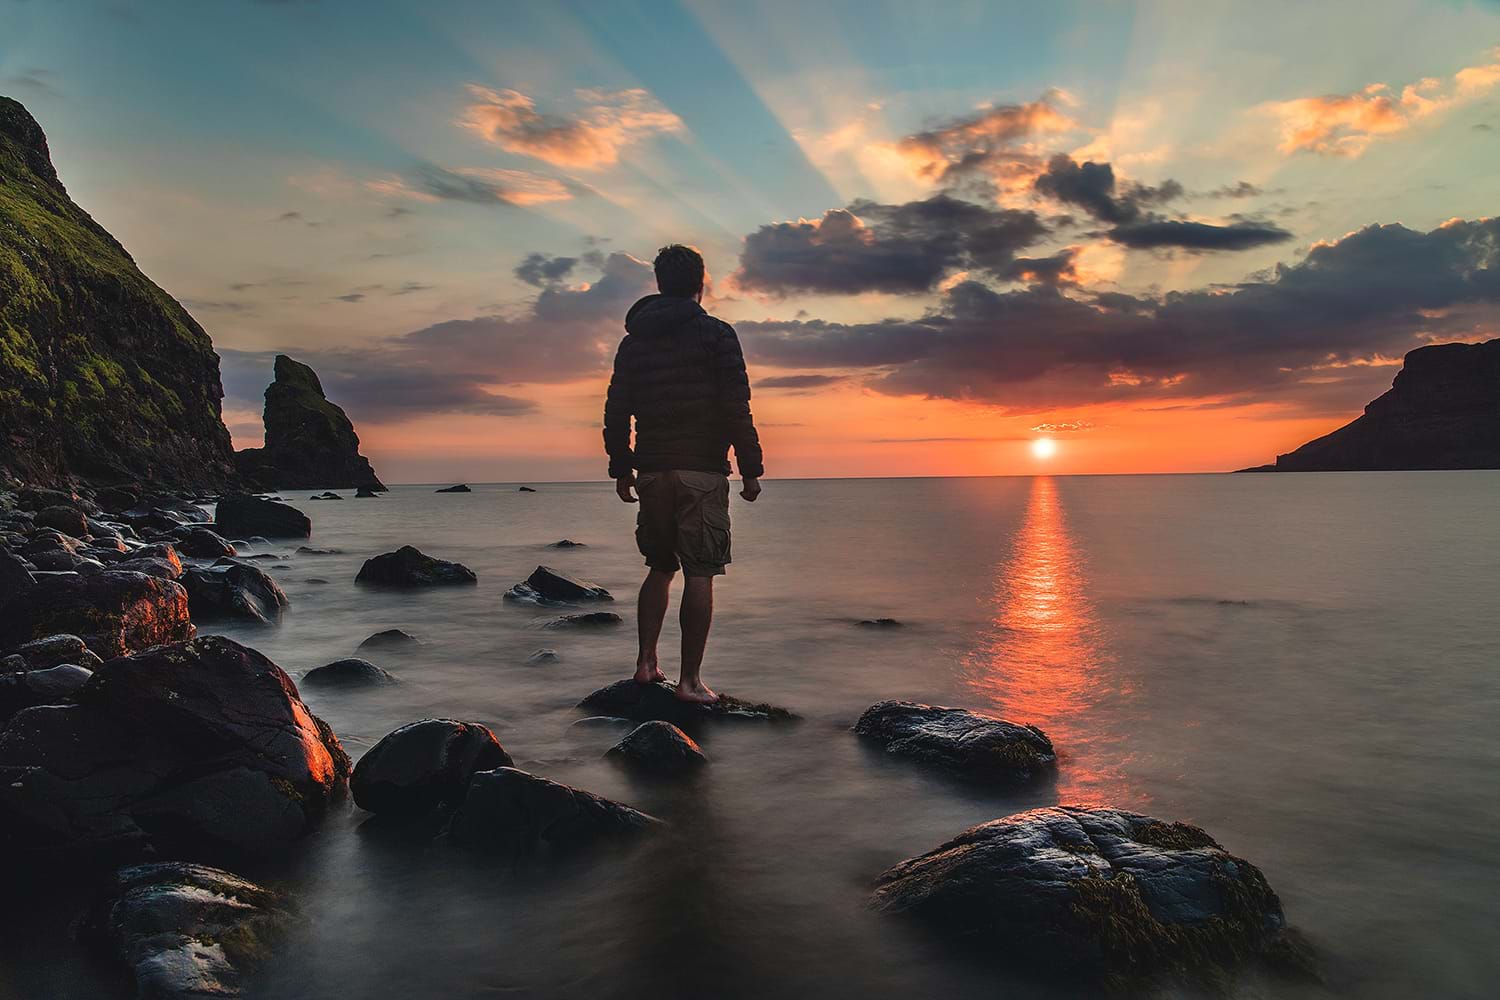 Man standing on rocks in water watching sunset